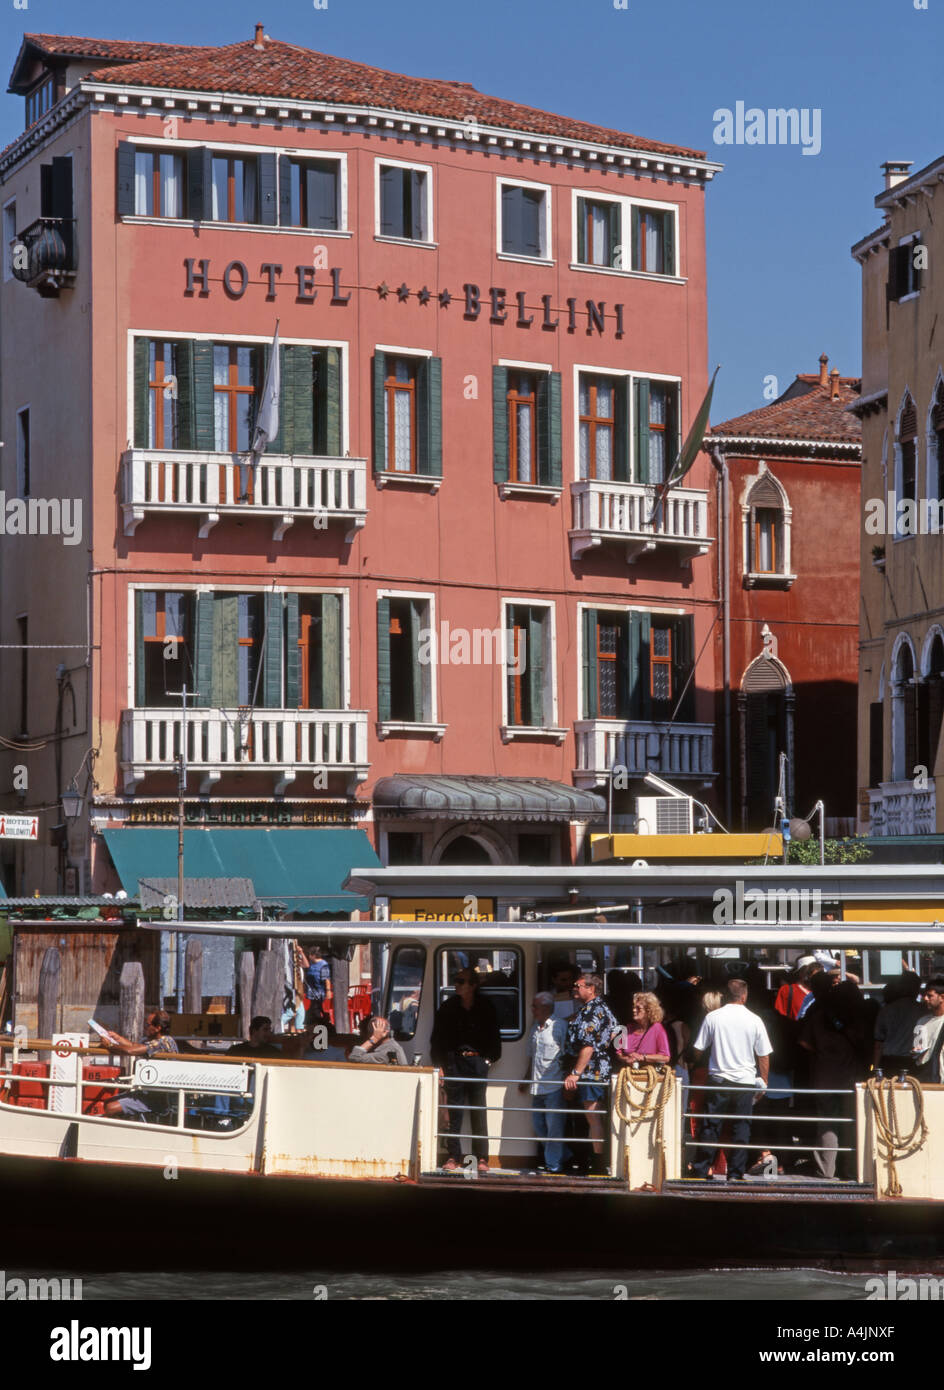 Venice, Veneto, Italy. Hotel Bellini and Vaporetto on Grand Canal Stock  Photo - Alamy